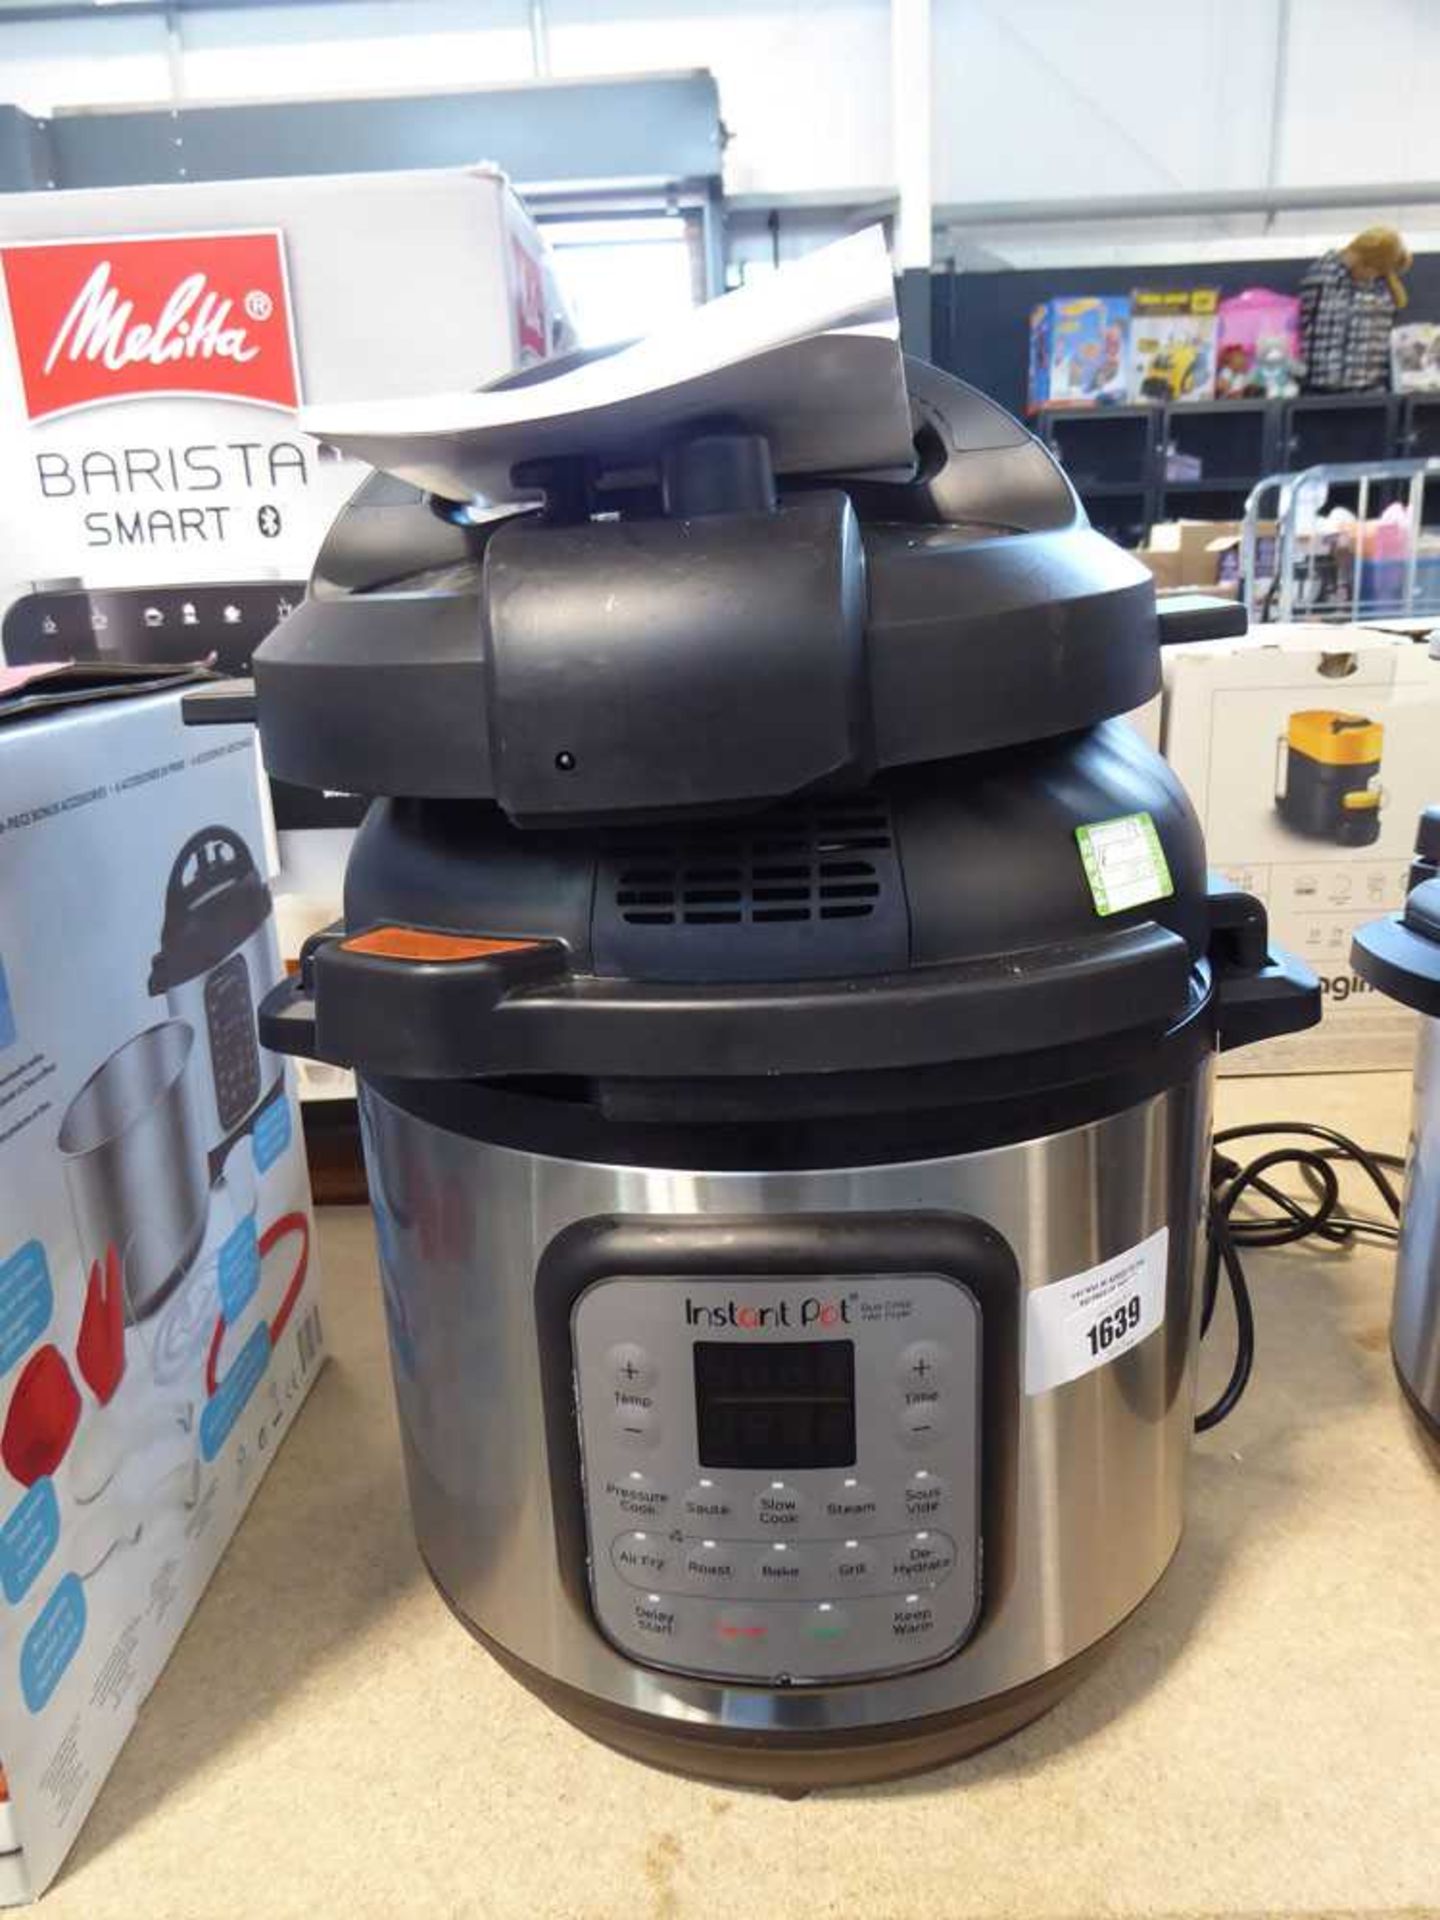 +VAT Instant Pot pressure cooker and air fryer, unboxed